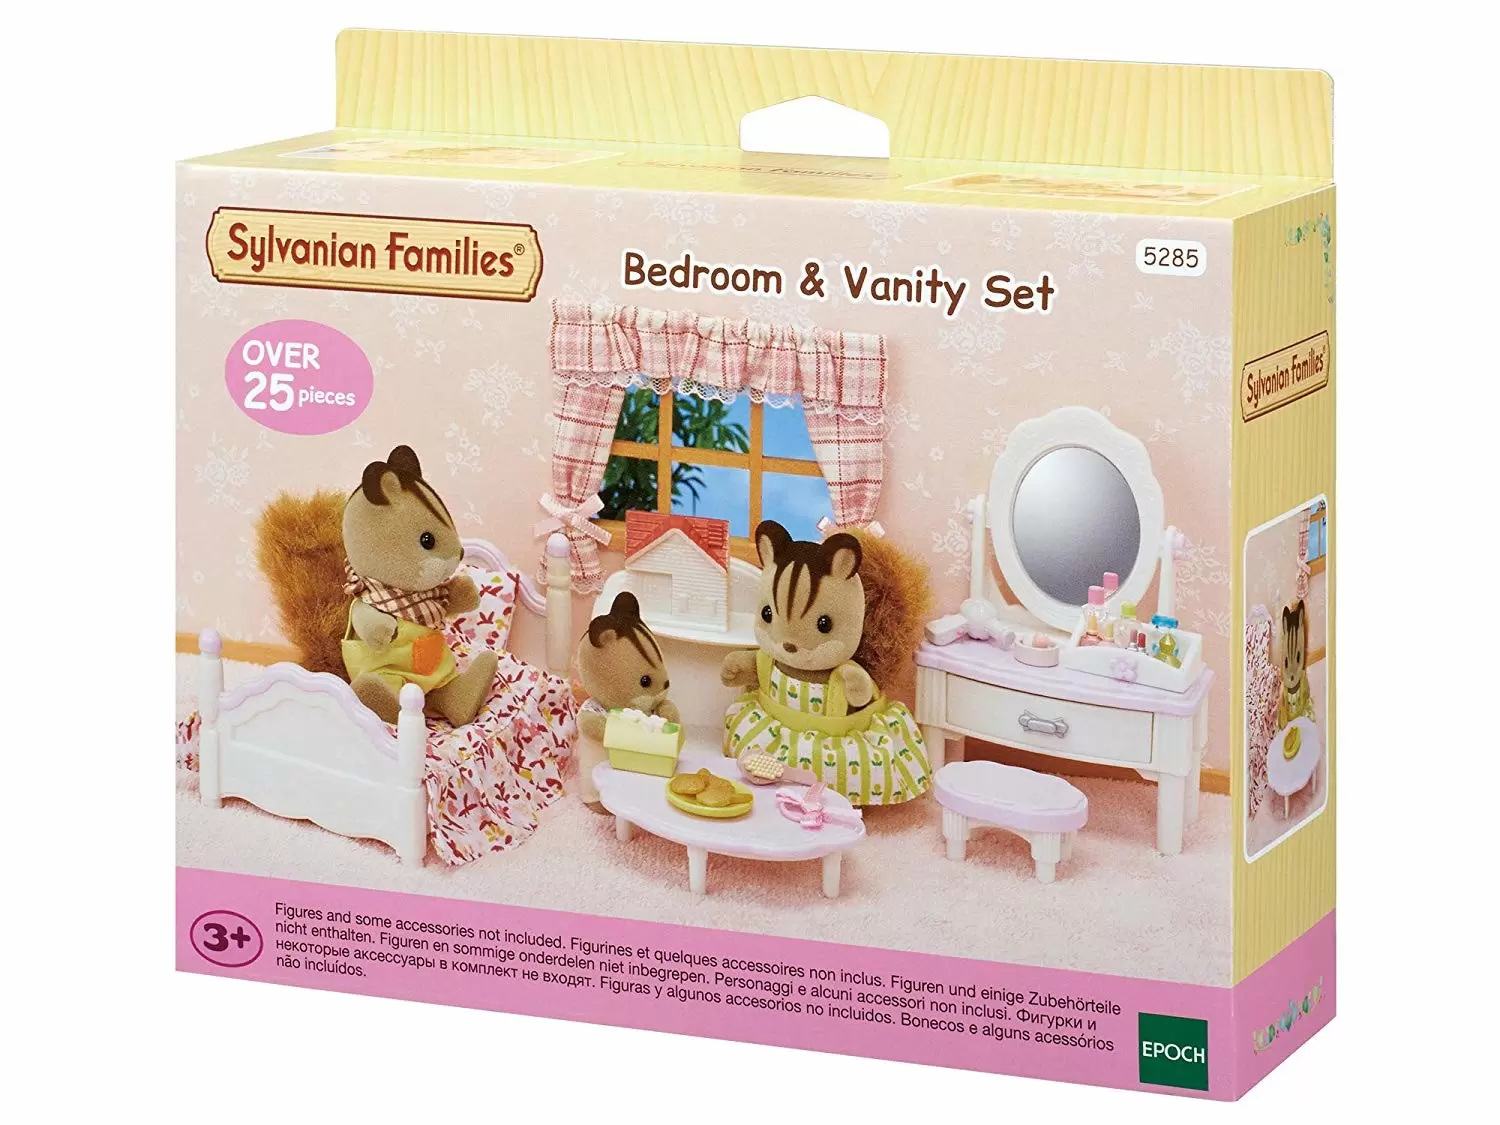 Sylvanian Families (Europe) - Bedroom & Vanity Set